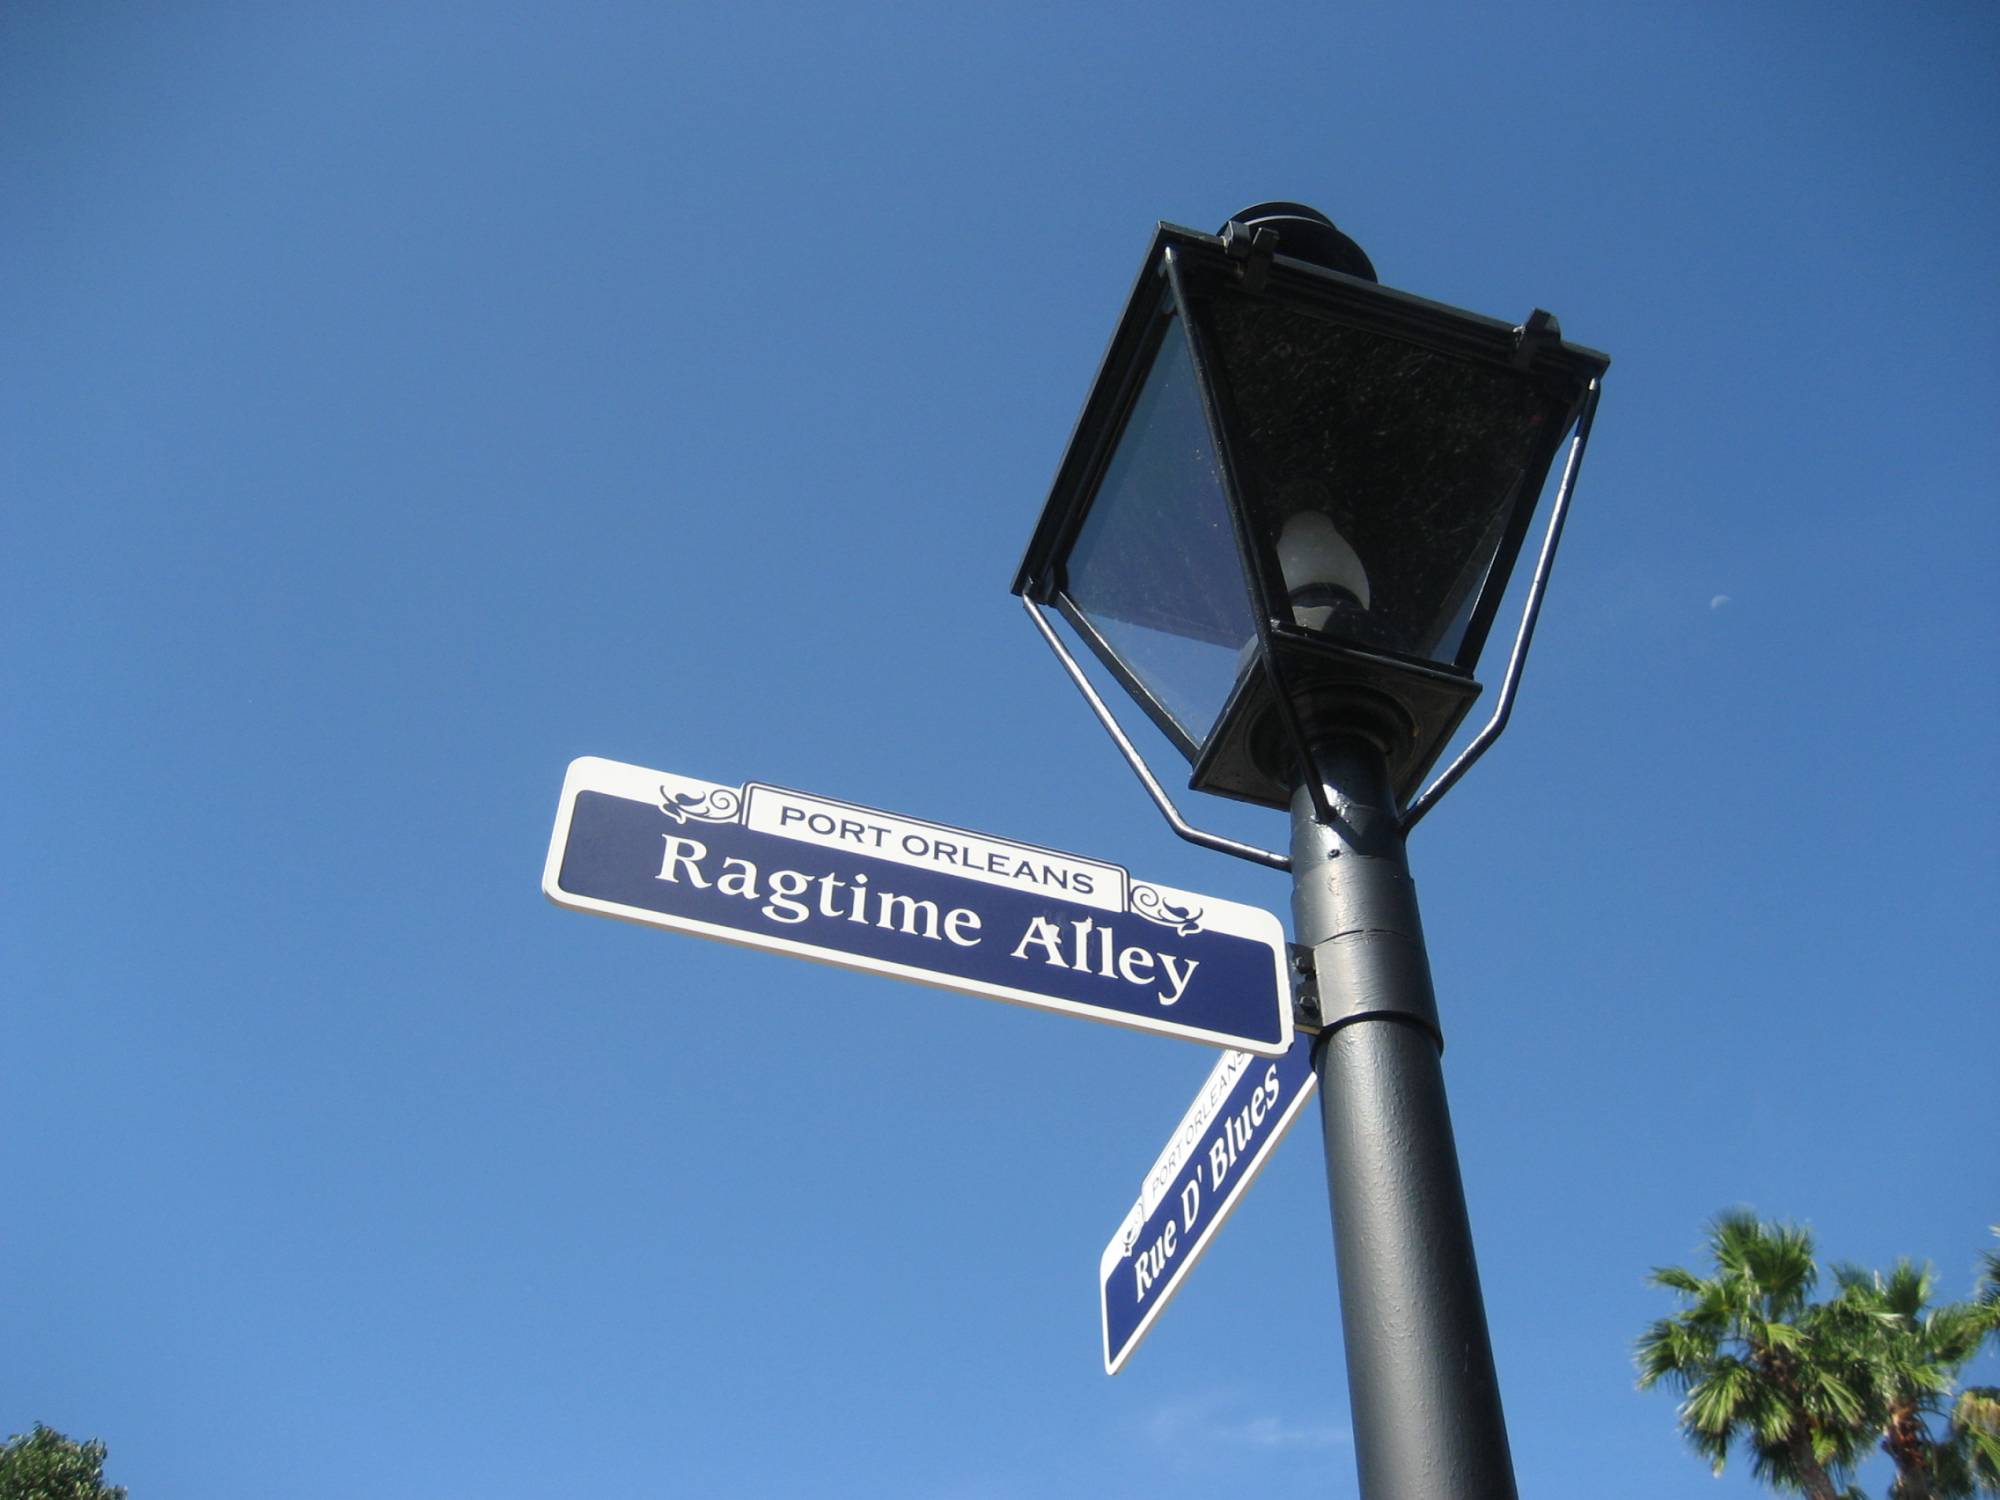 Port Orleans French Quarter - Street Sign